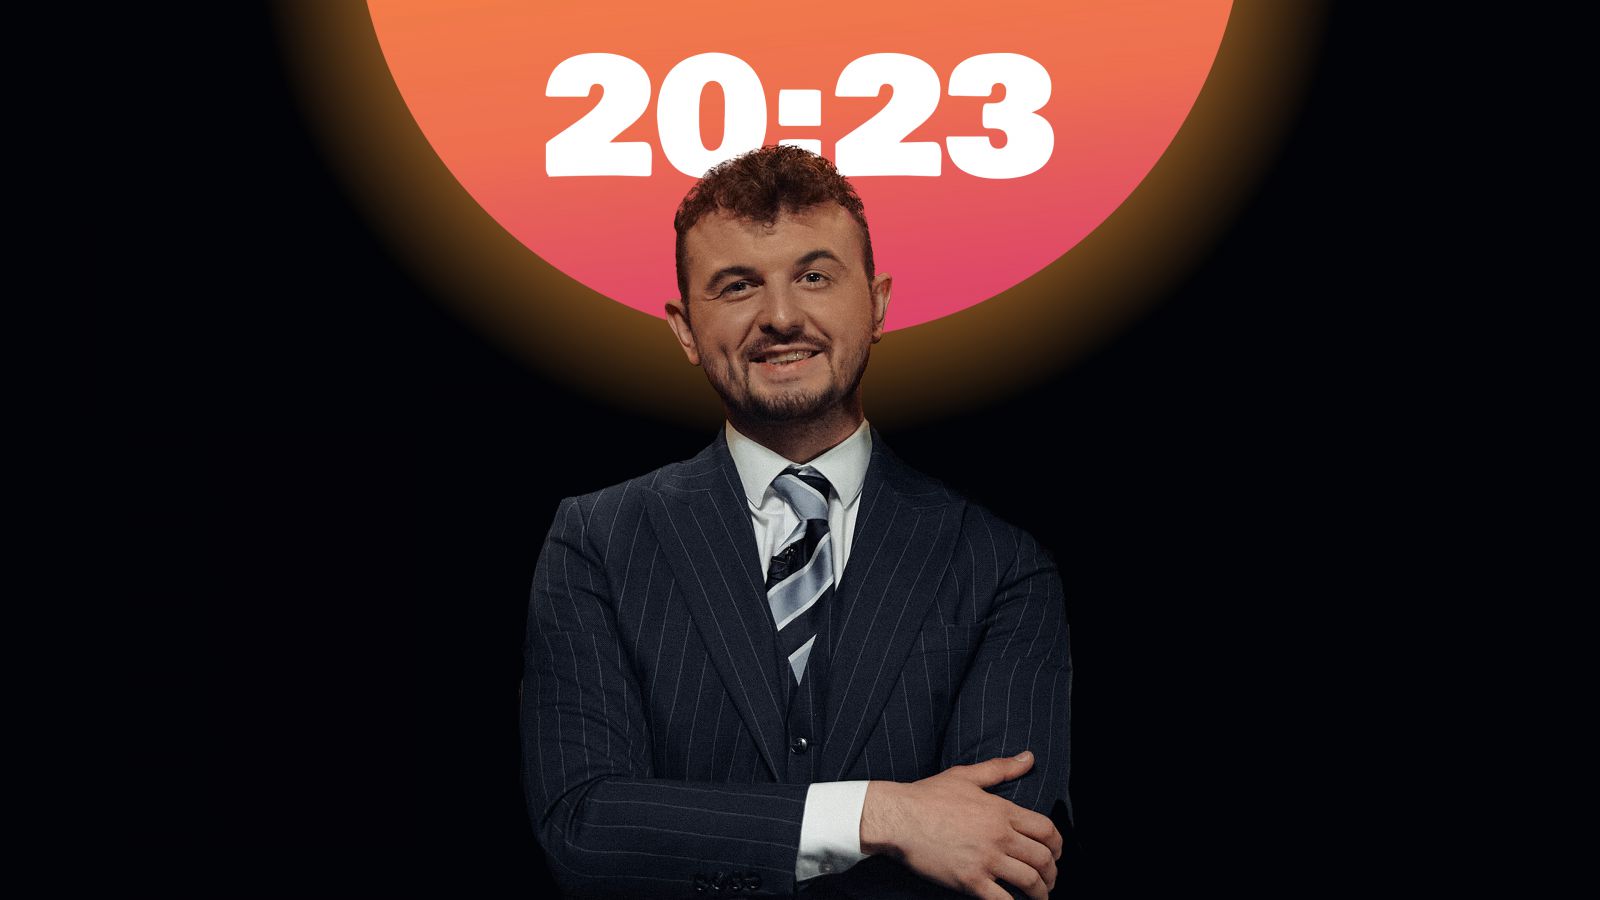 20:23 with Zhenya Yanovich - 29.10 at 16:00